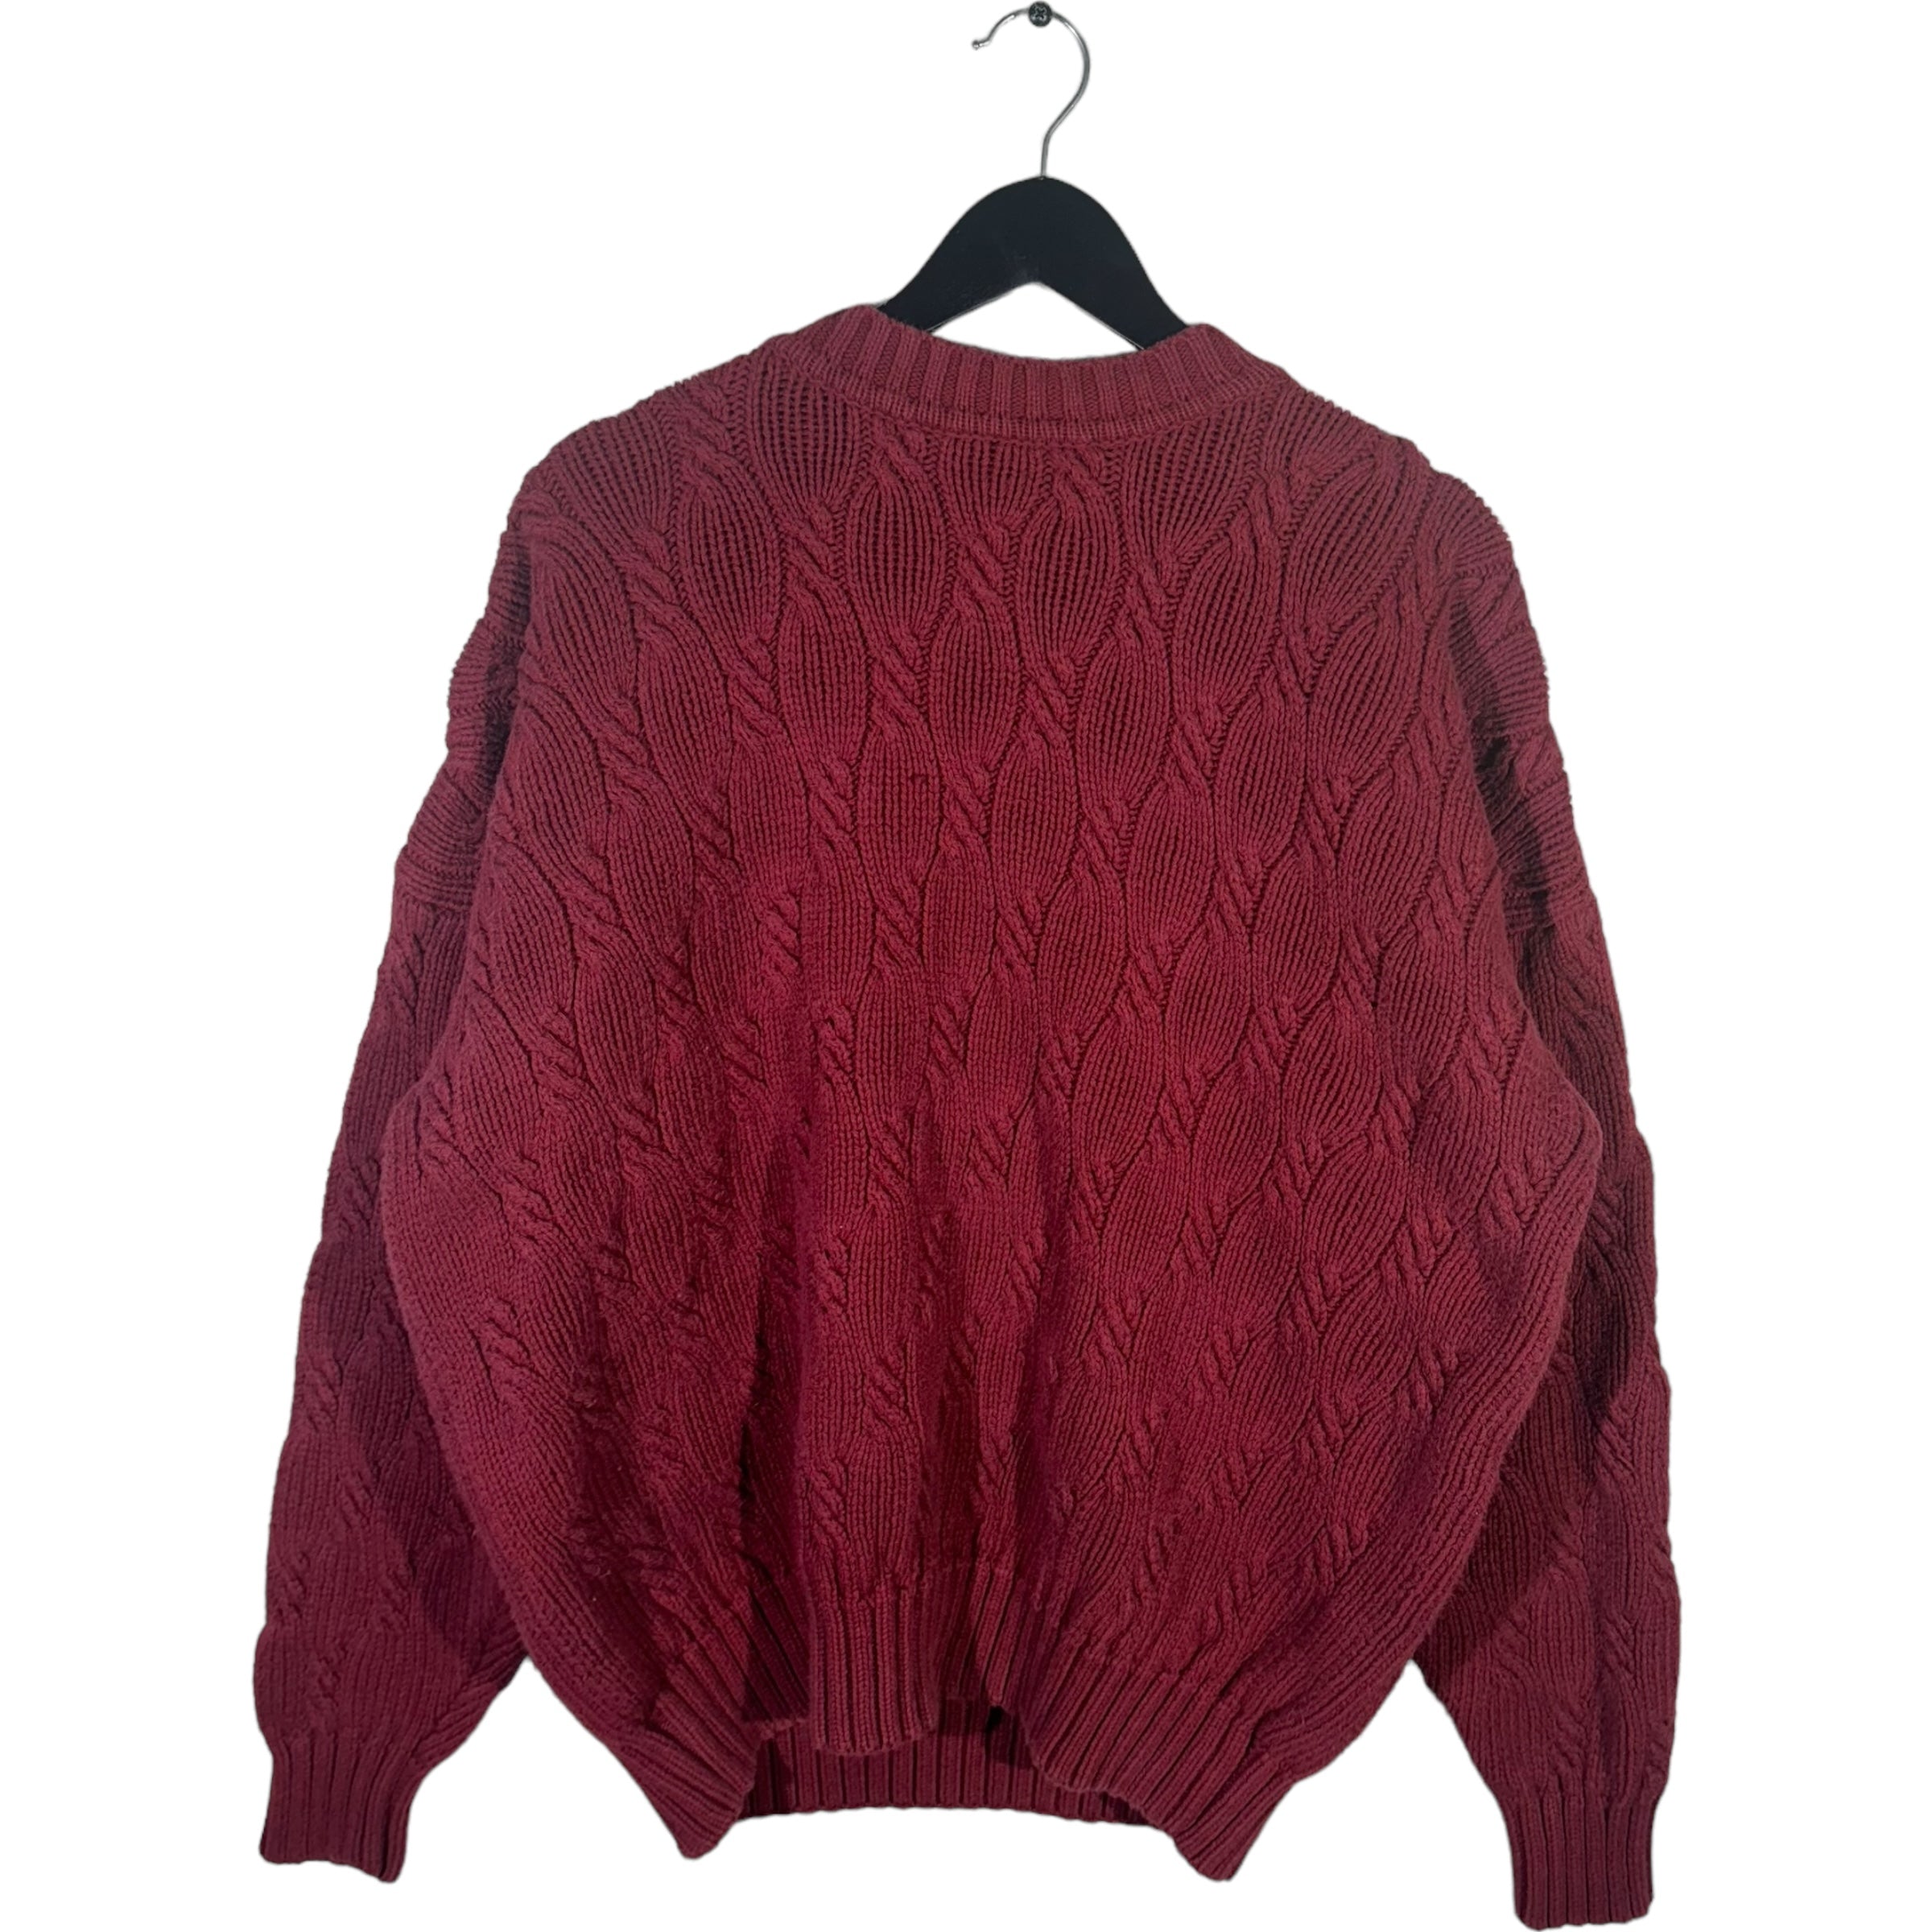 Vintage Gap Cable Knit Cotton Sweater 90s